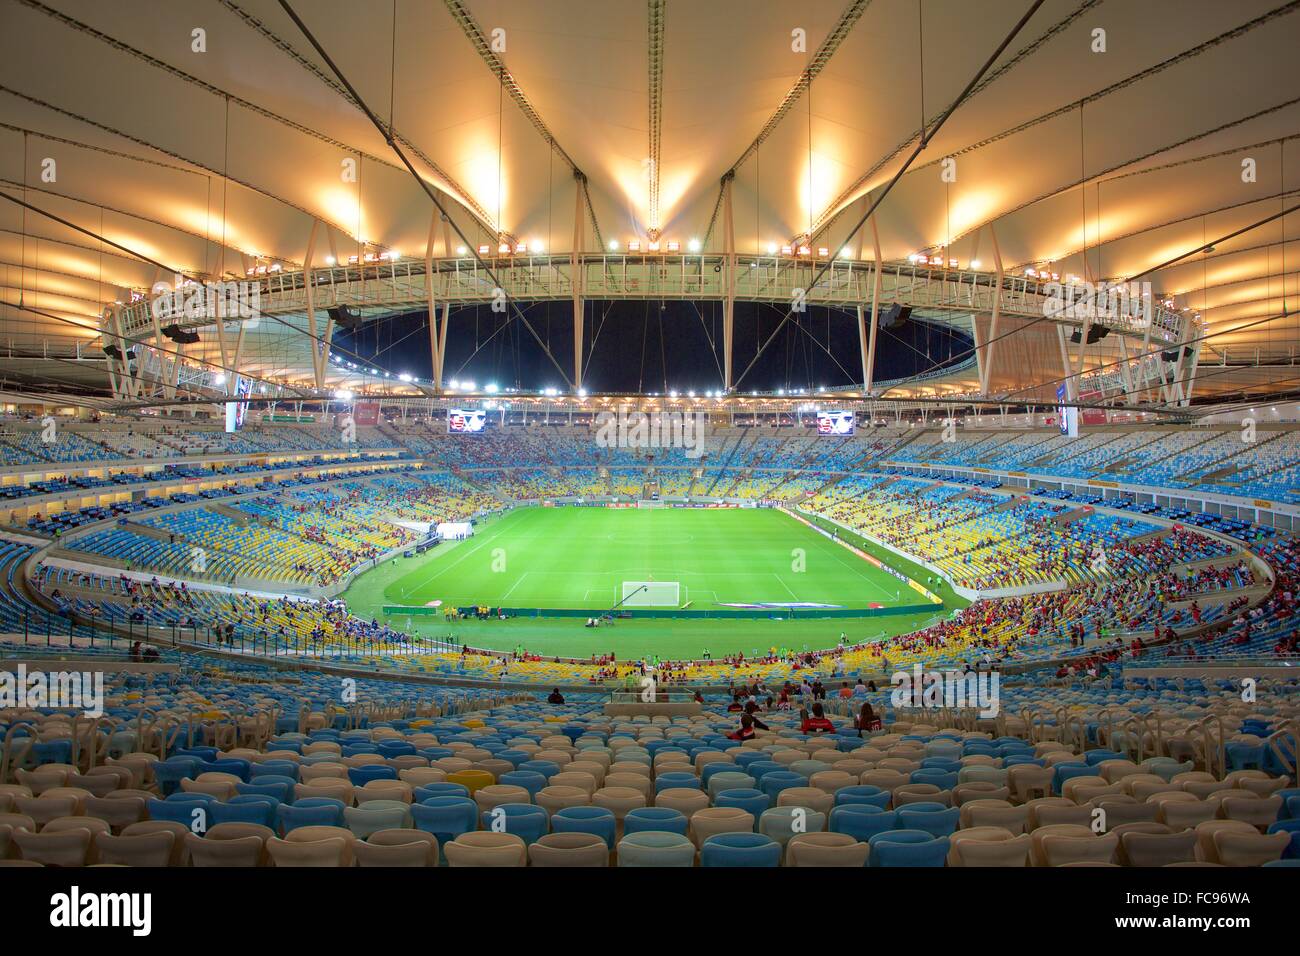 Из букв стадион. Стадион Маракана в Бразилии. Стадион «Маракана» в Рио-де-Жанейро, Бразилия.. Олимпийский стадион «Маракана». Rio-de-Janeyro Marakana stadioni.